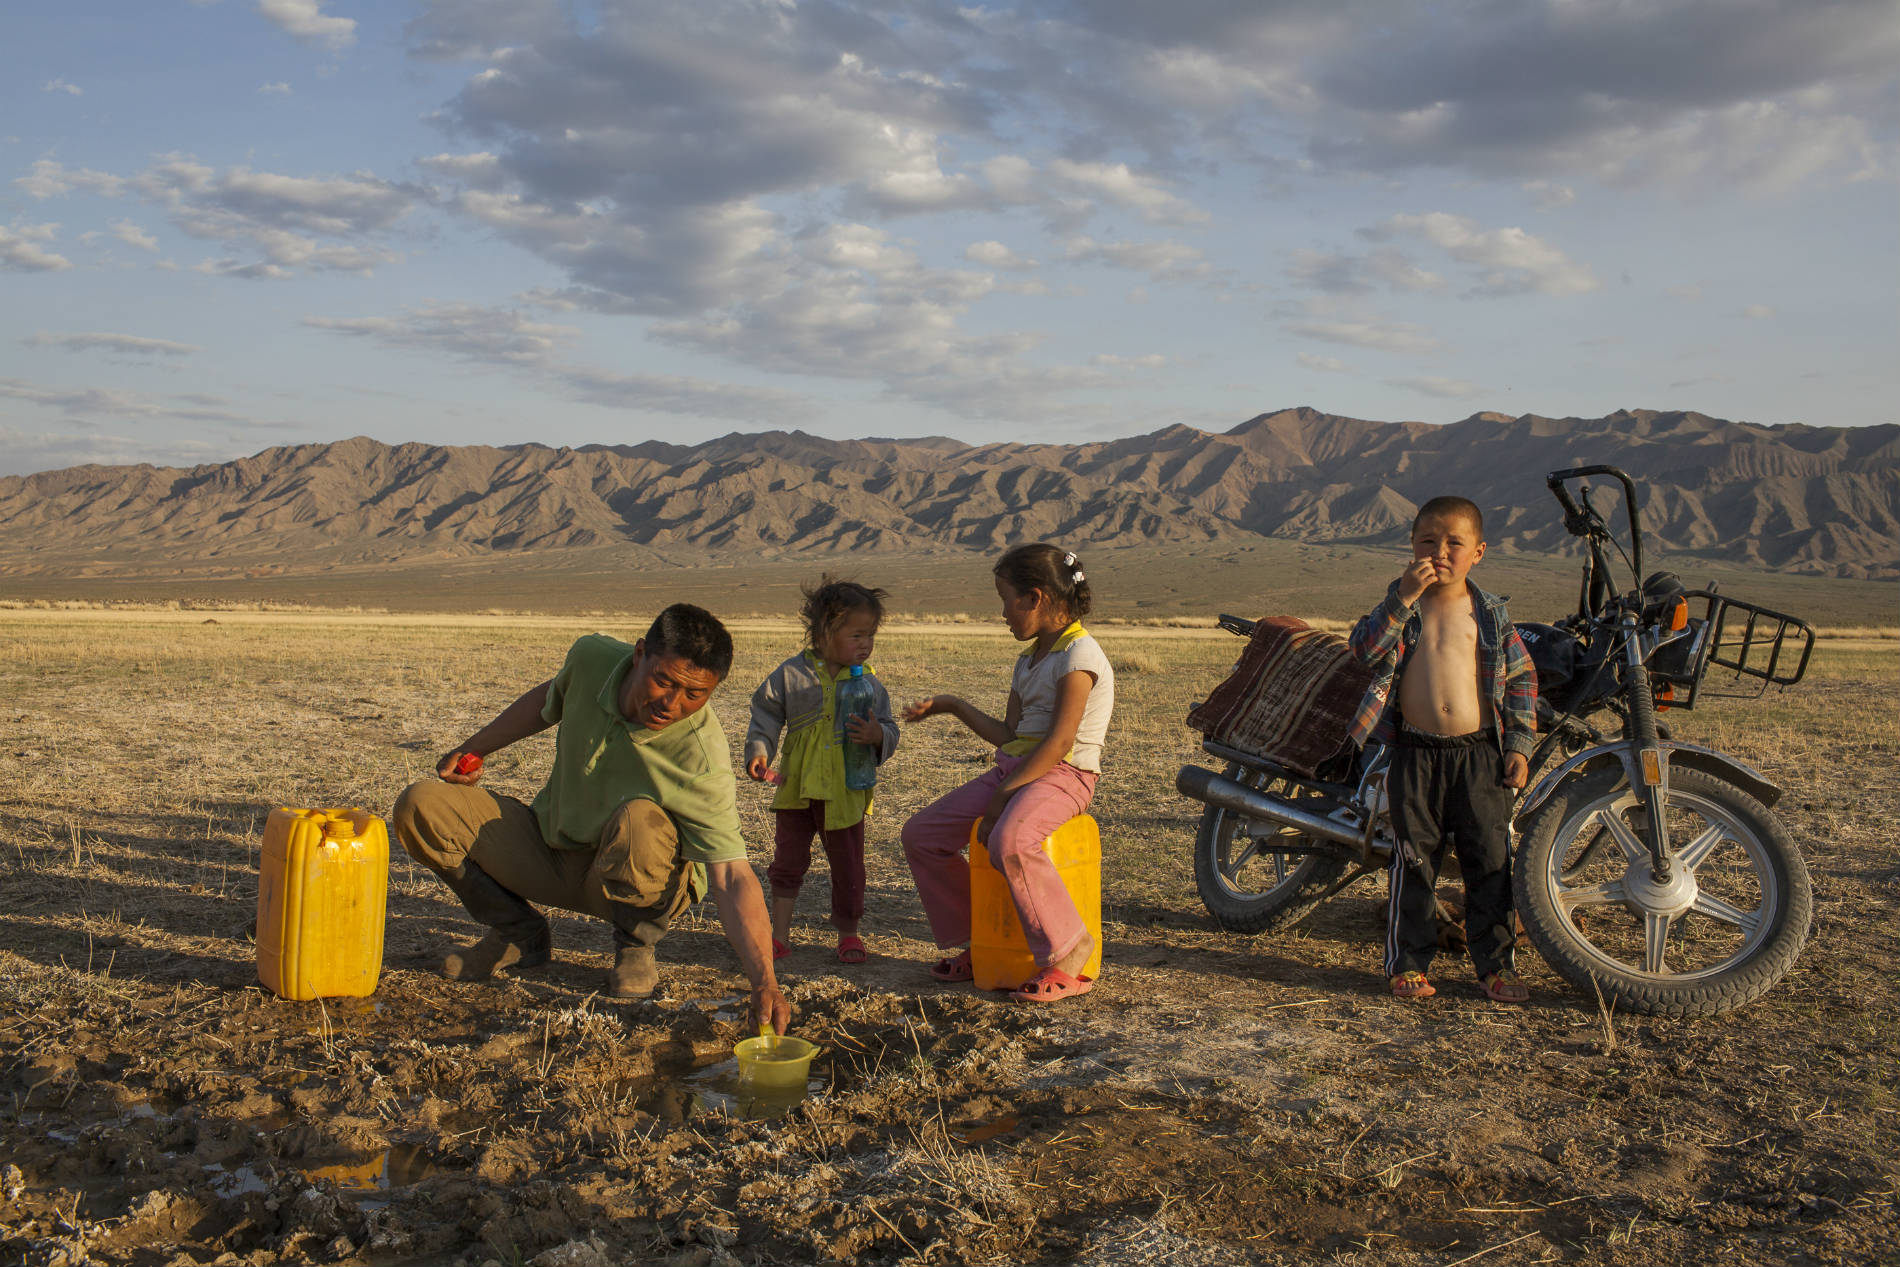 Nomads gathering water, Mongolia